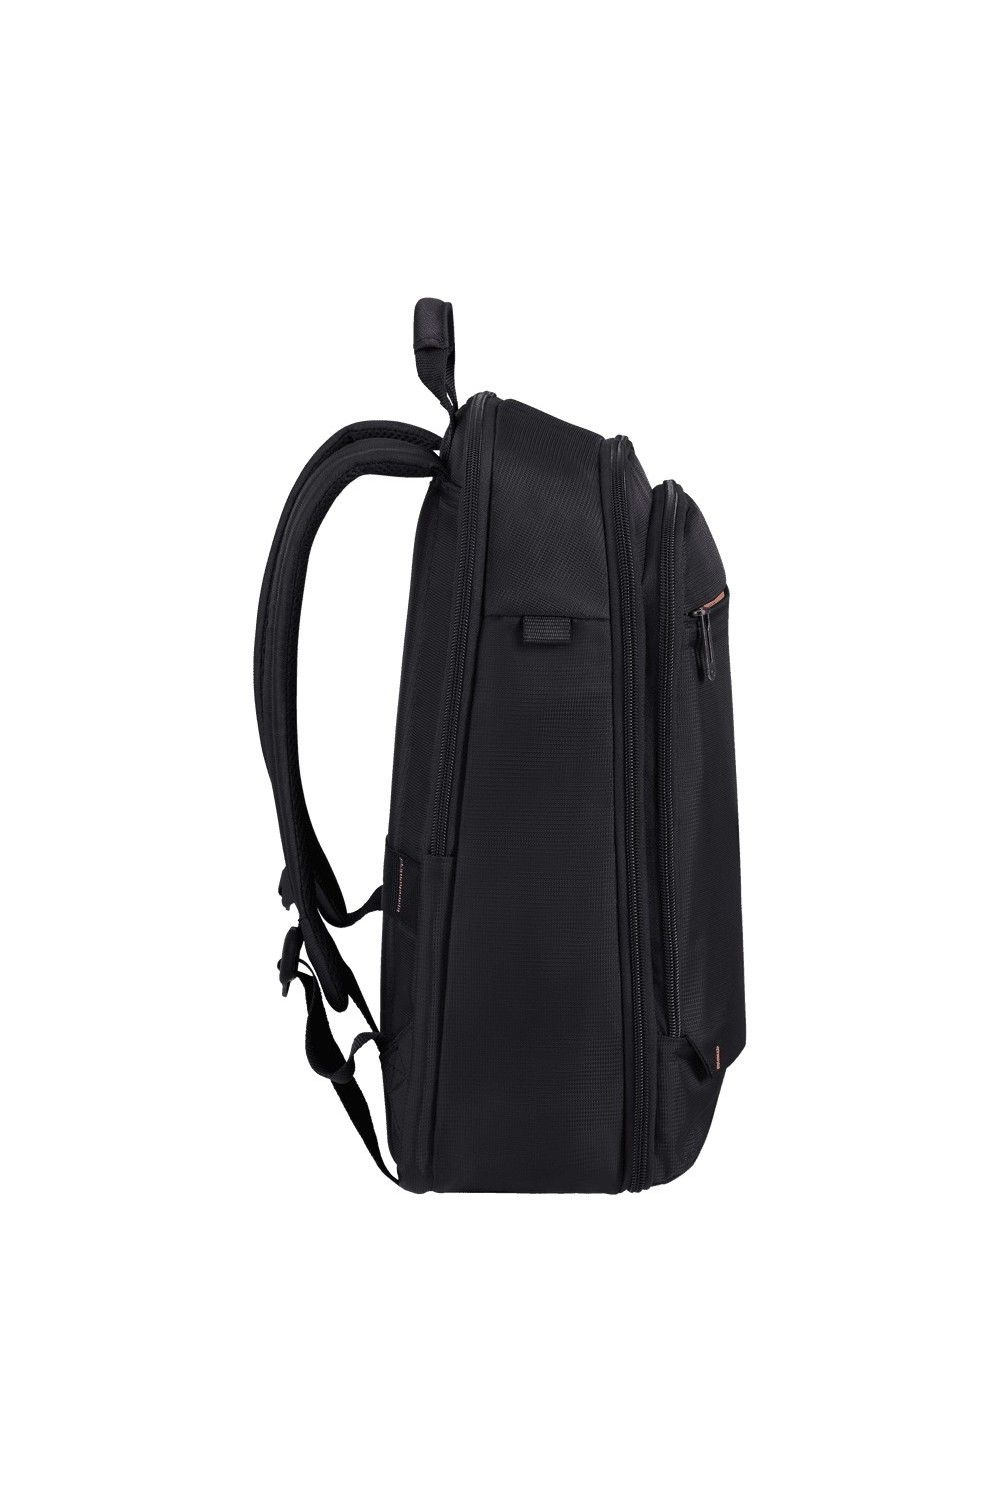 Samsonite Laptop Backpack Network 4 15 inches black